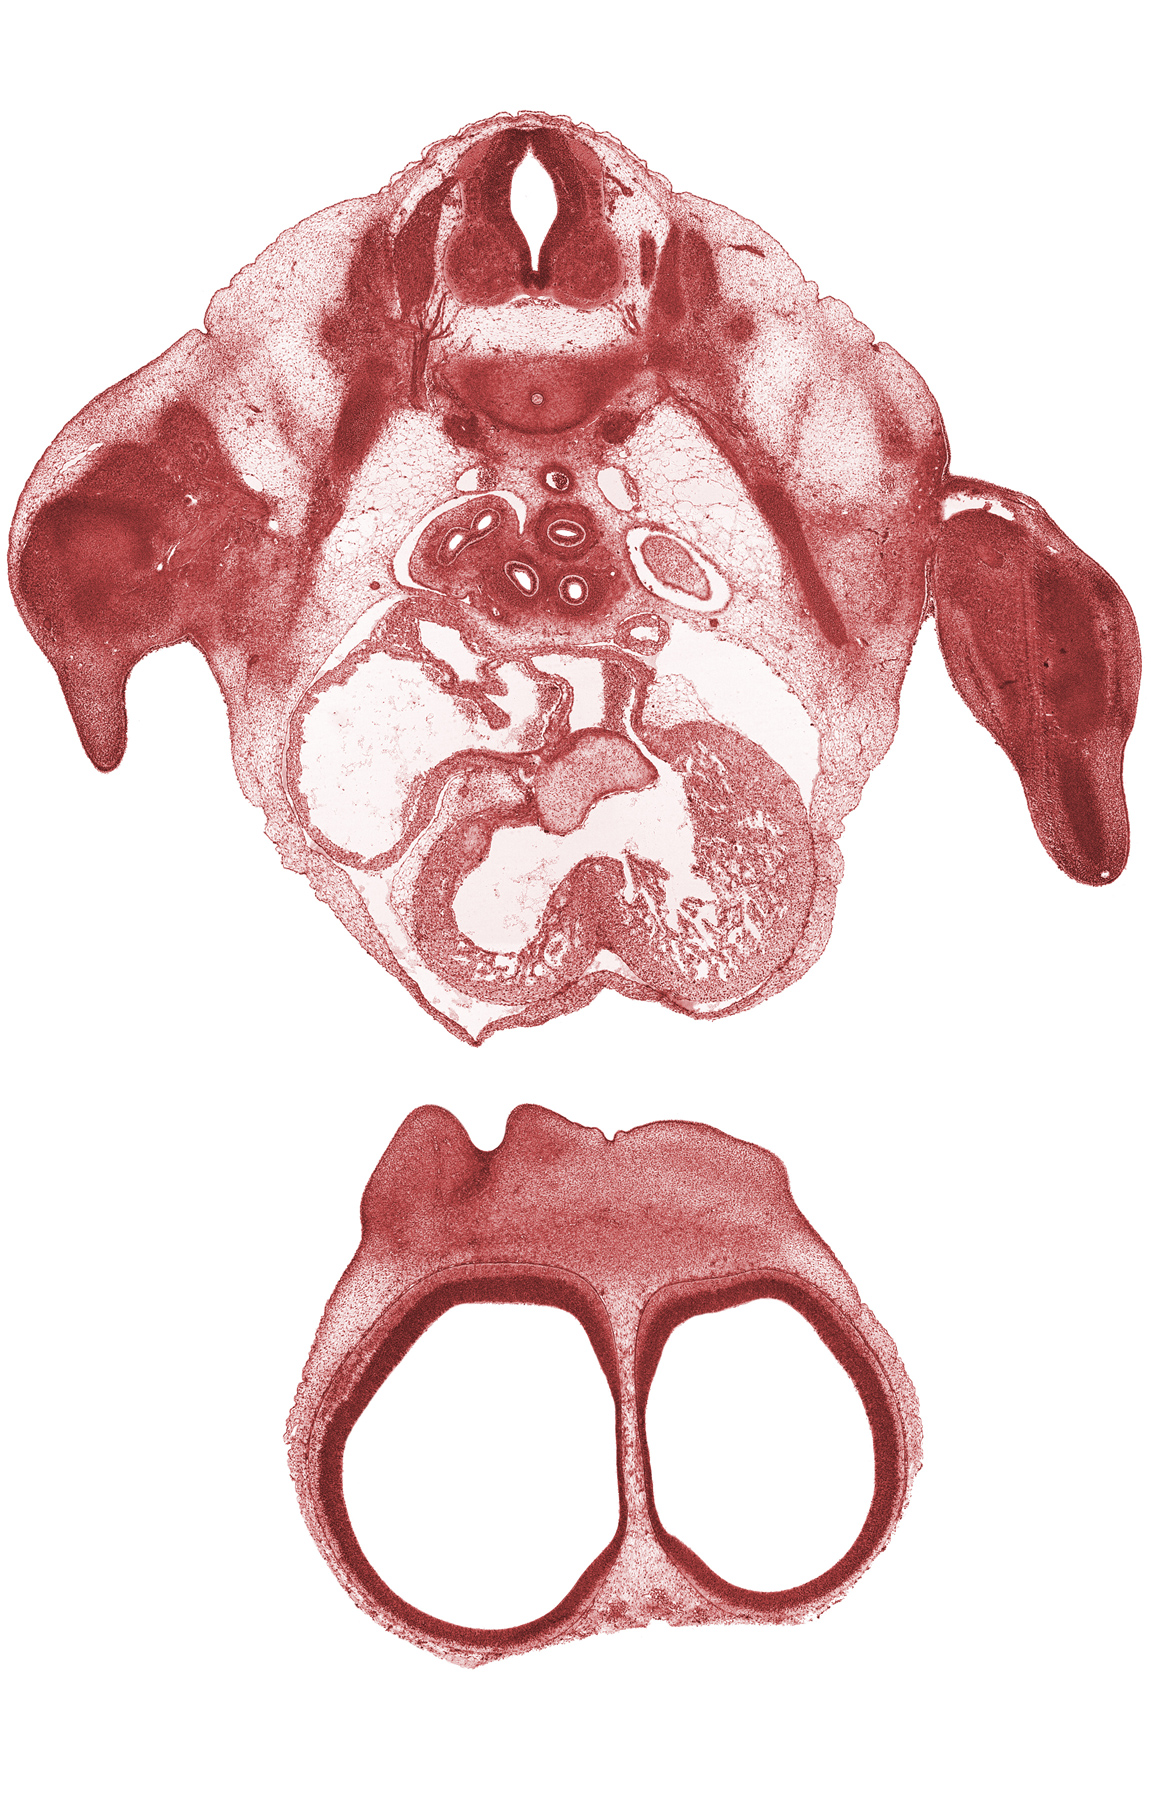 T-2 / T-3 interganglion region, aorta, apex of left lung sac, elbow region, forearm region, hand, interorbital ligament, interventricular foramen, lateral ventricle, left atrium, primary interatrial septum (septum primum), right atrium, right primary bronchus, sinus venosus, tertiary bronchopulmonary buds in upper lobe of right lung